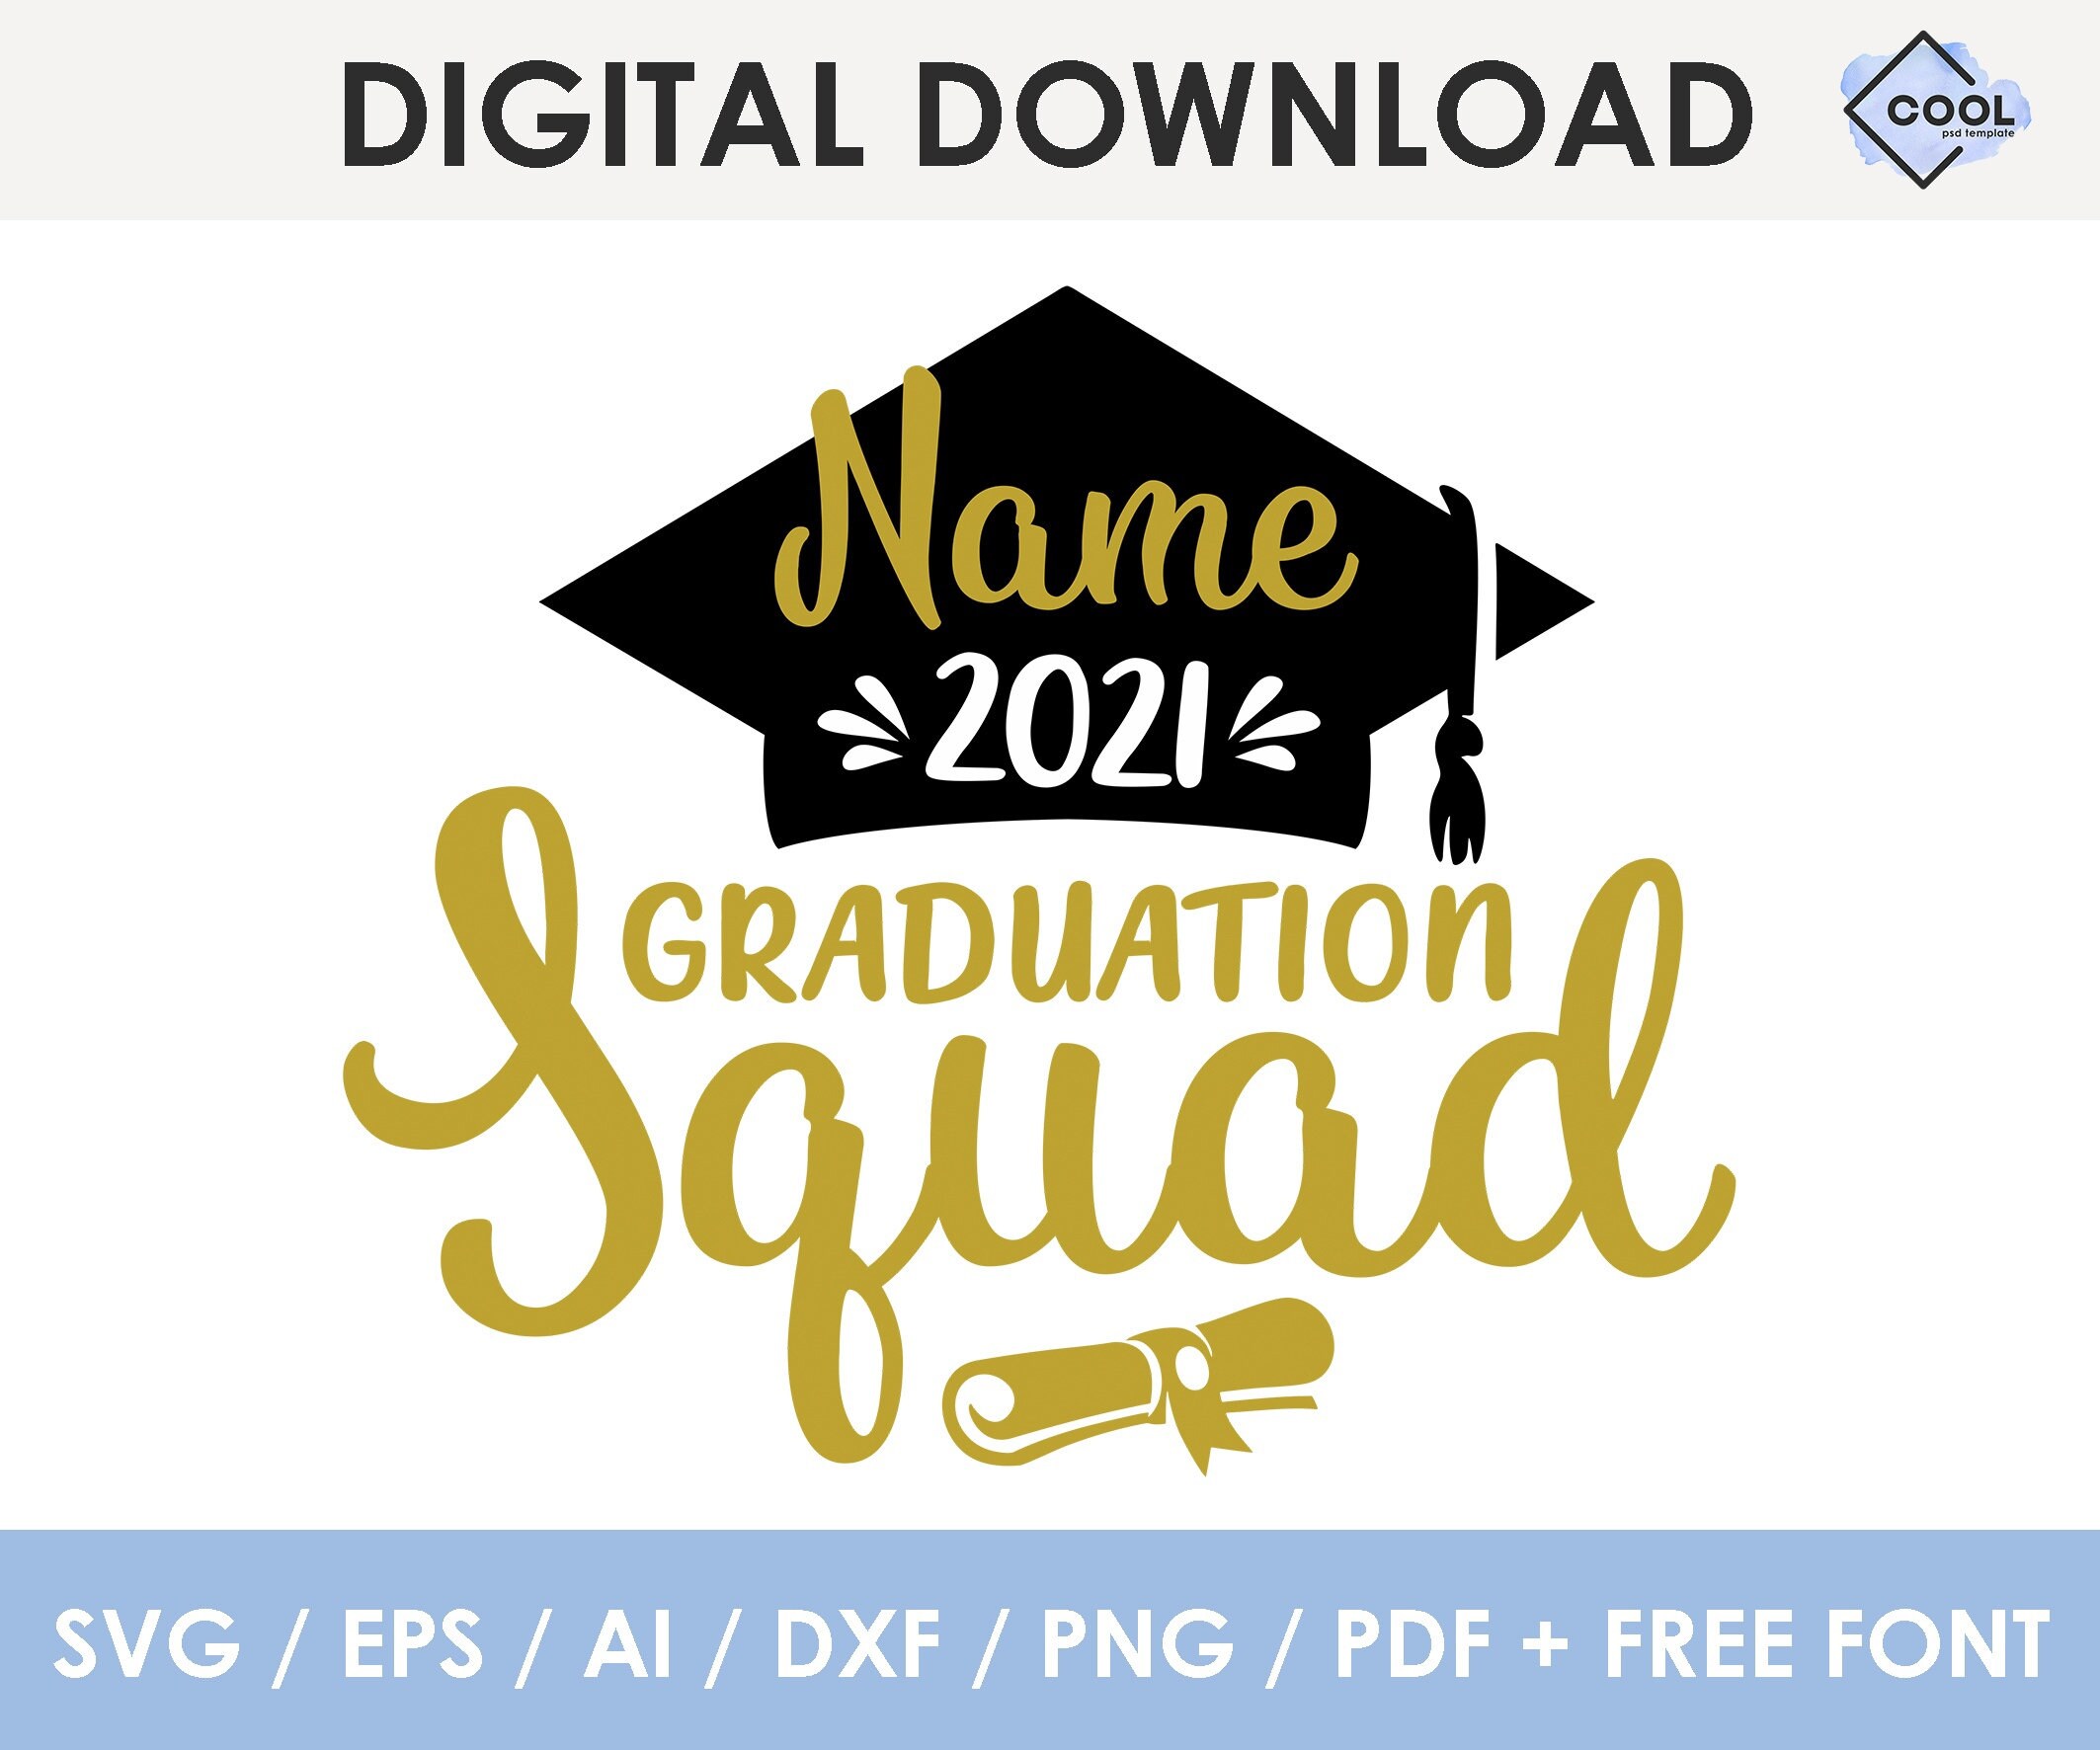 Download 2021 graduation squad svg with name 2021 Graduation svg | Etsy